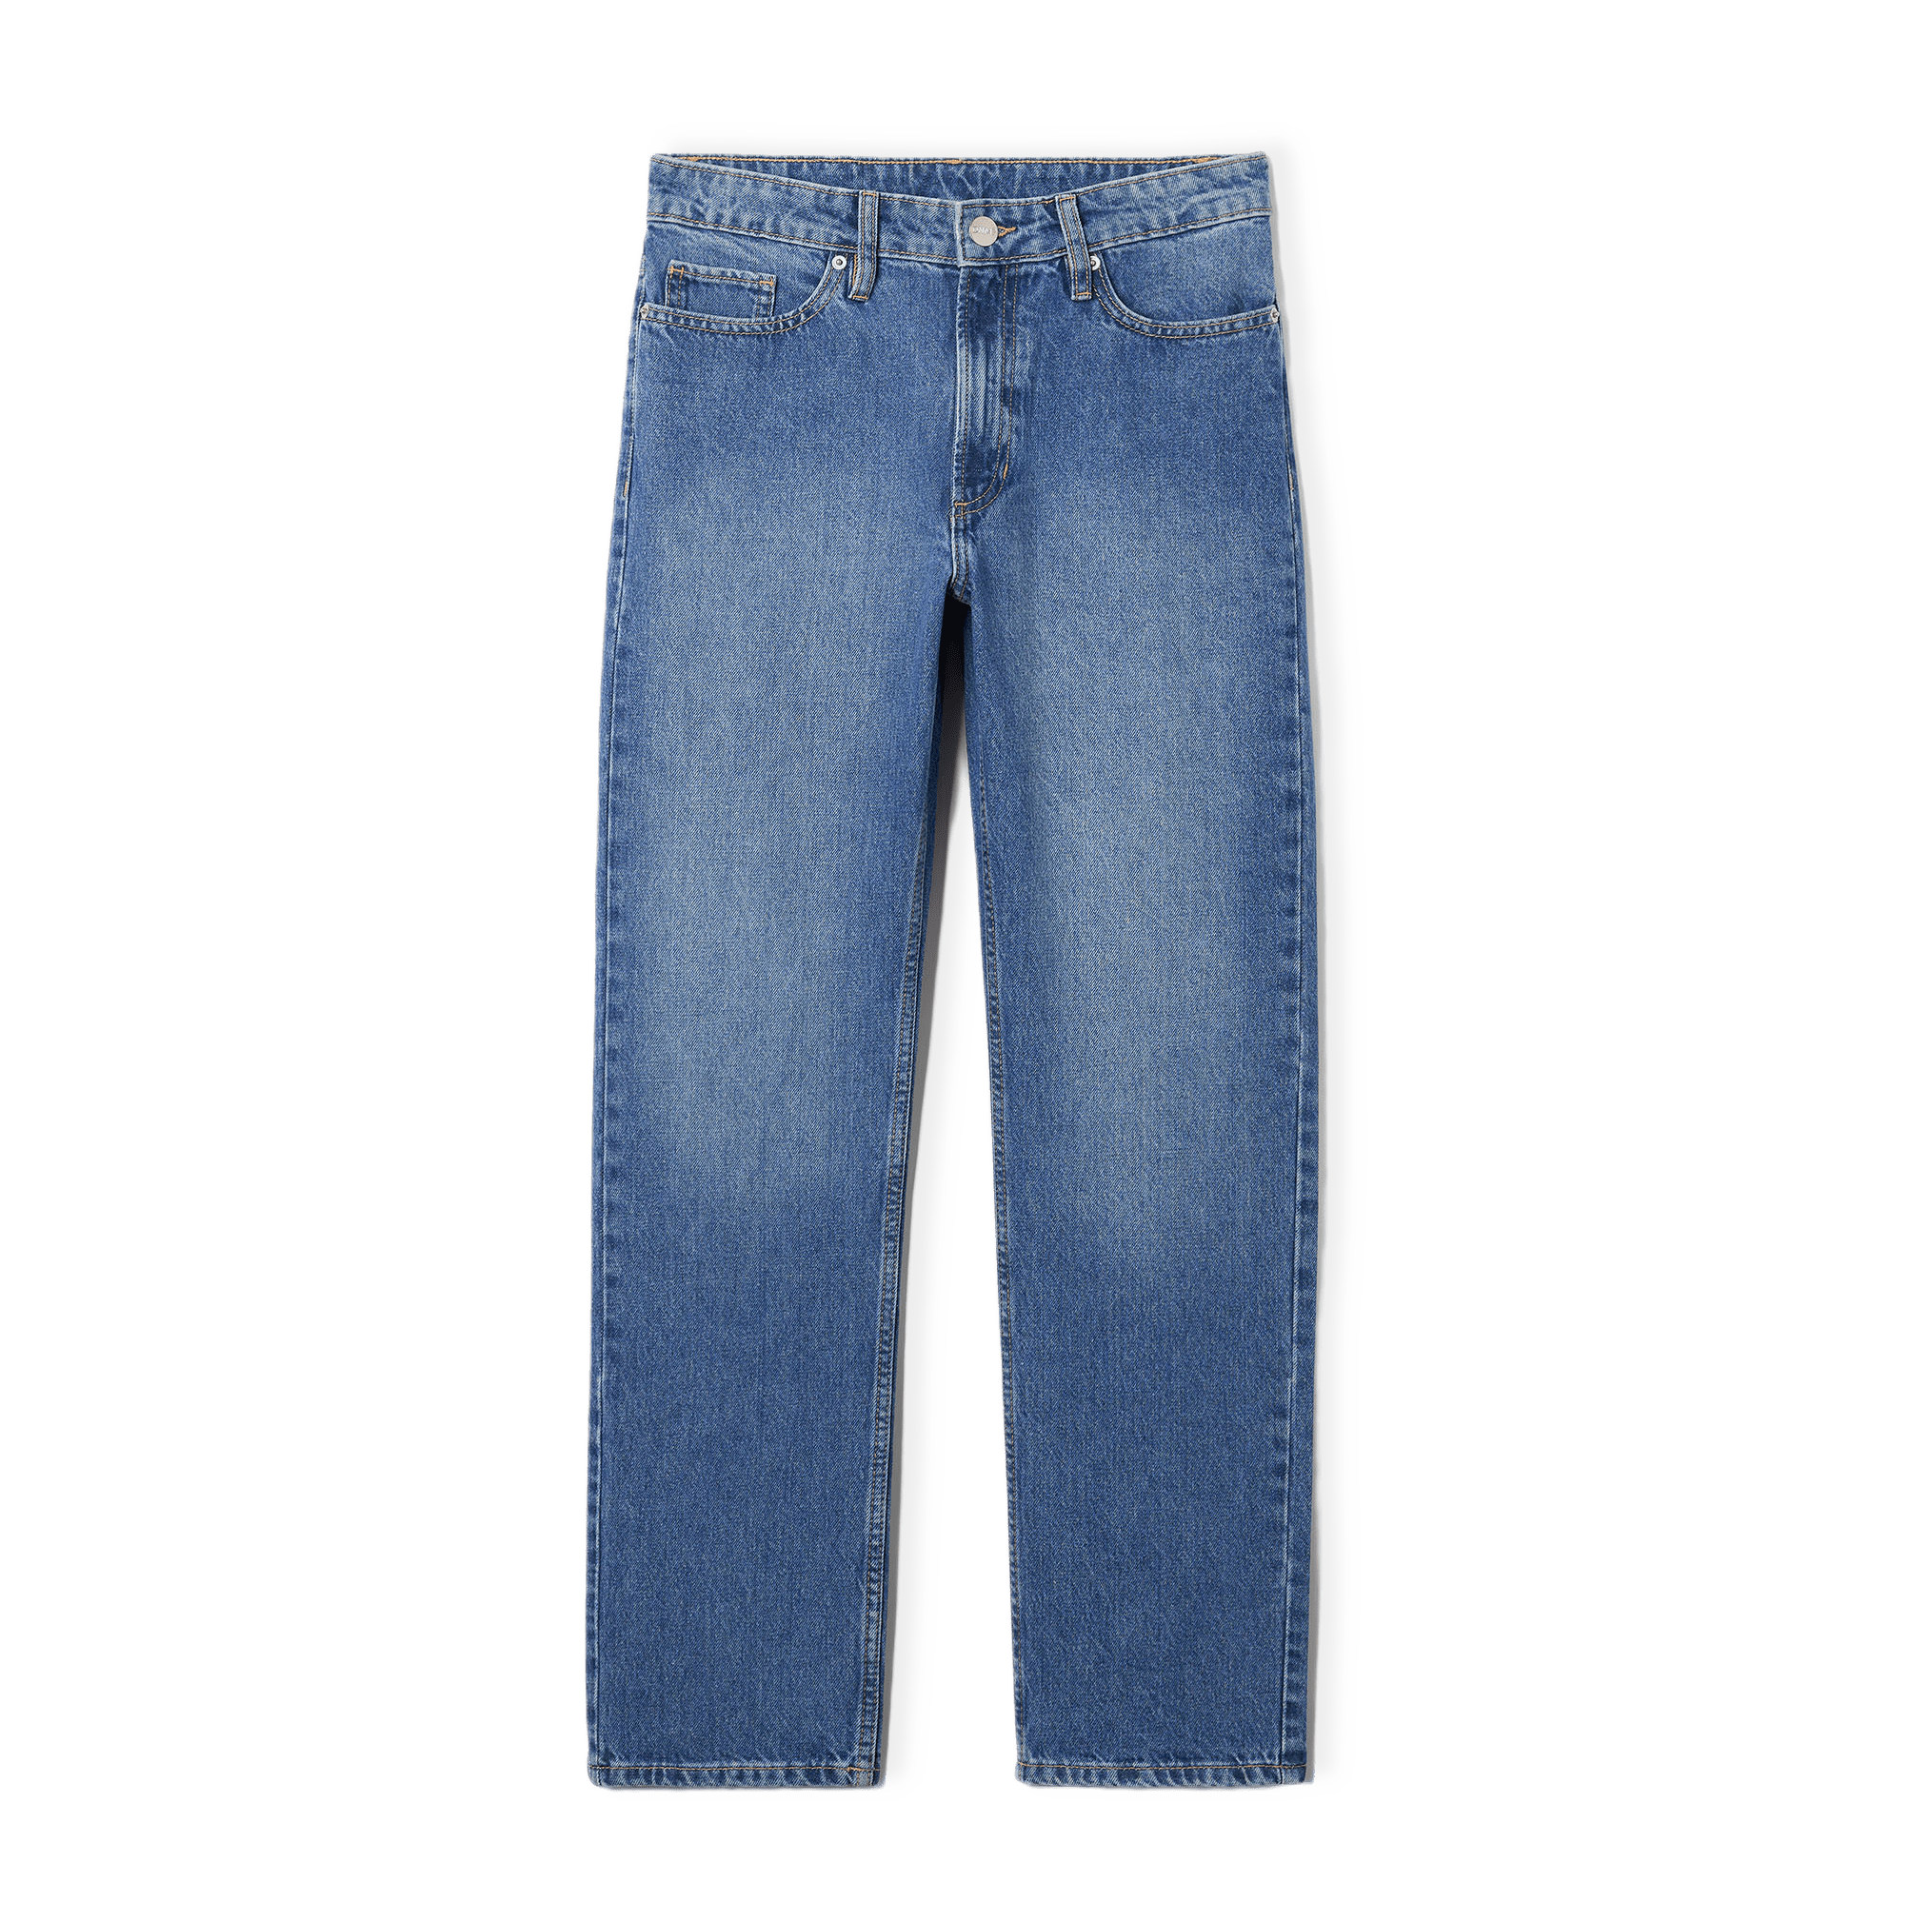 Raka jeans DNM7 01 från DNM7